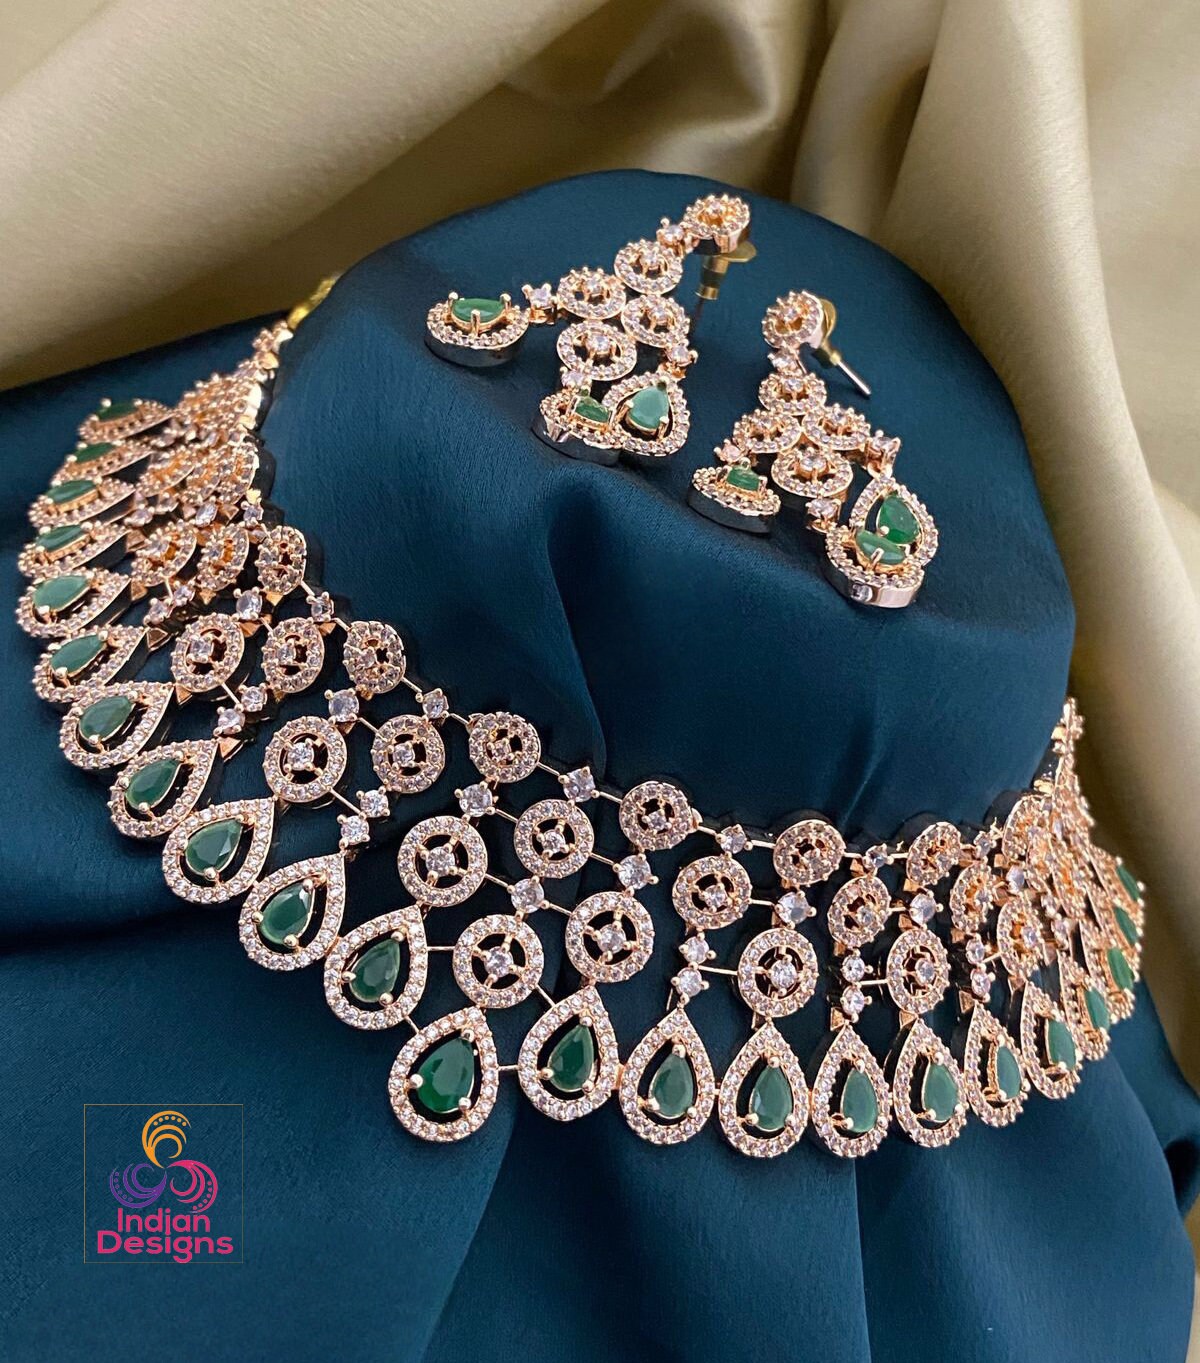 Rose Gold American Diamond Wedding Choker necklace| Cz Crystal choker necklace|Statement Choker Earrings|AD Bridal choker set | Gift for Her